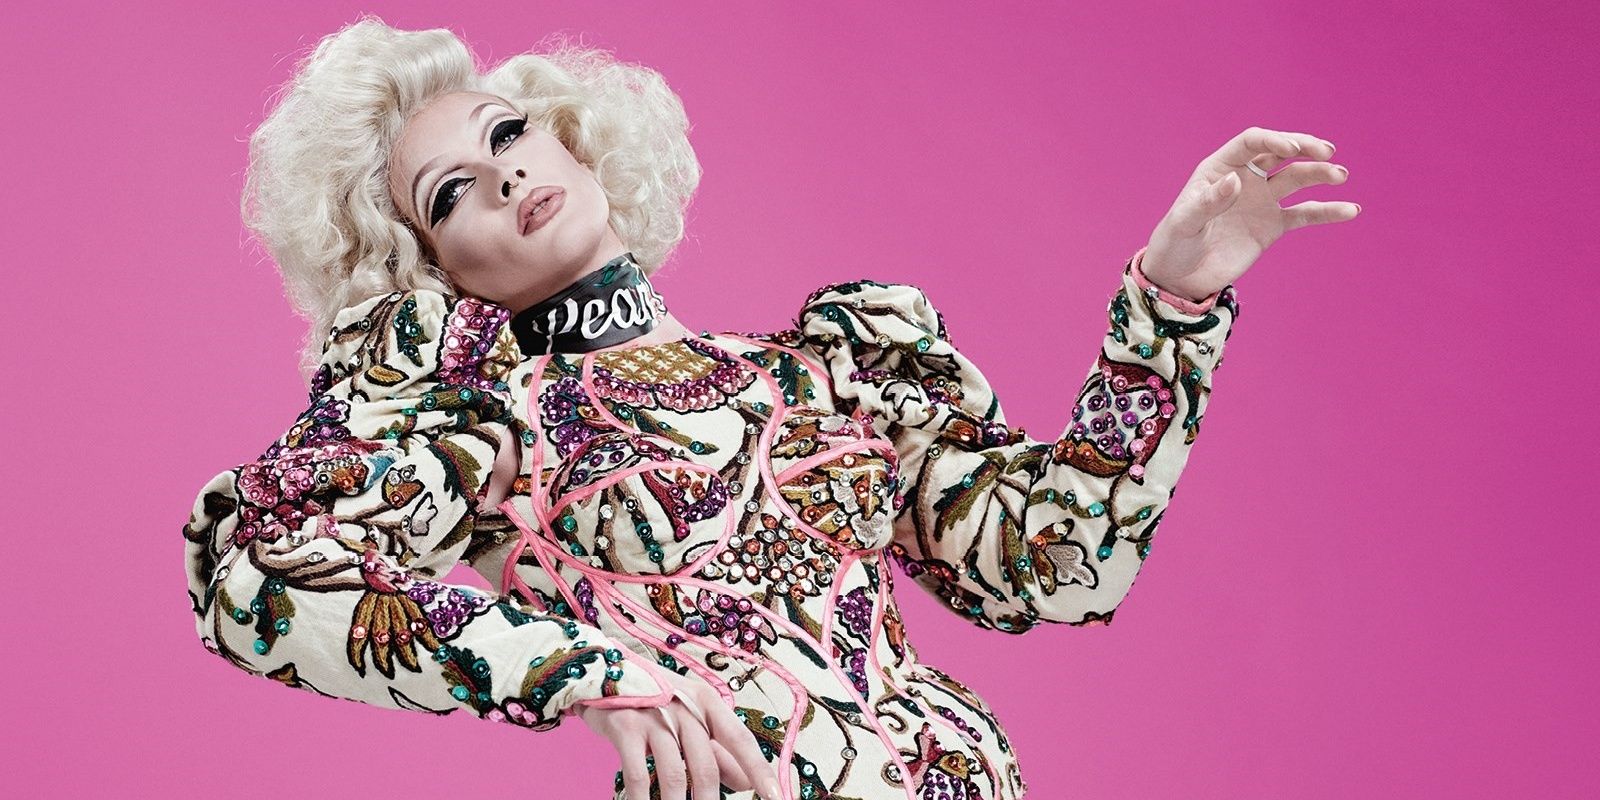 Pearl from RuPaul's Drag Race posing in drag